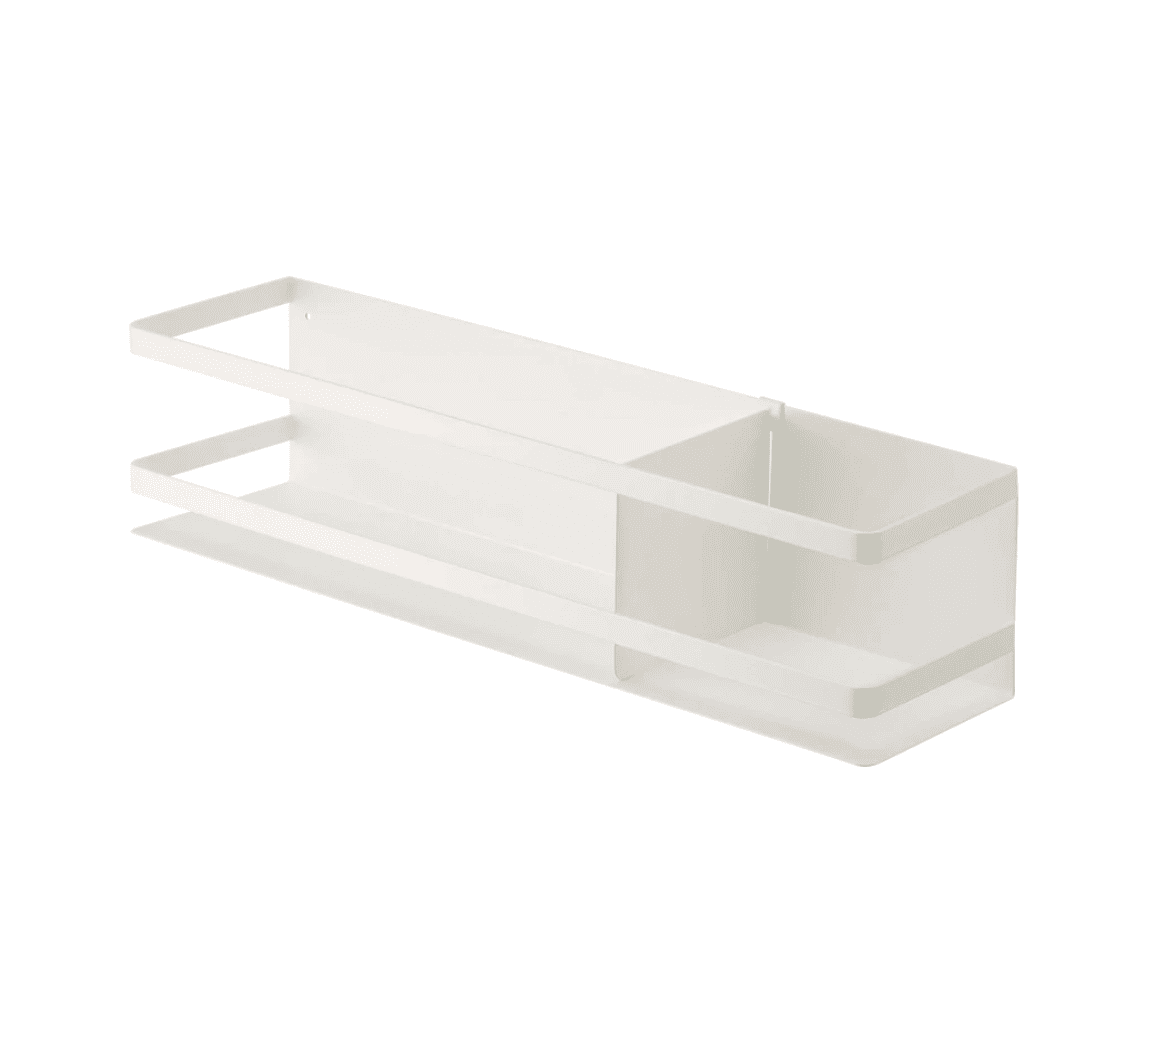 Laigoo Adhesive Floating Non Drilling Set Of 3 Display Picture Ledge Shelf